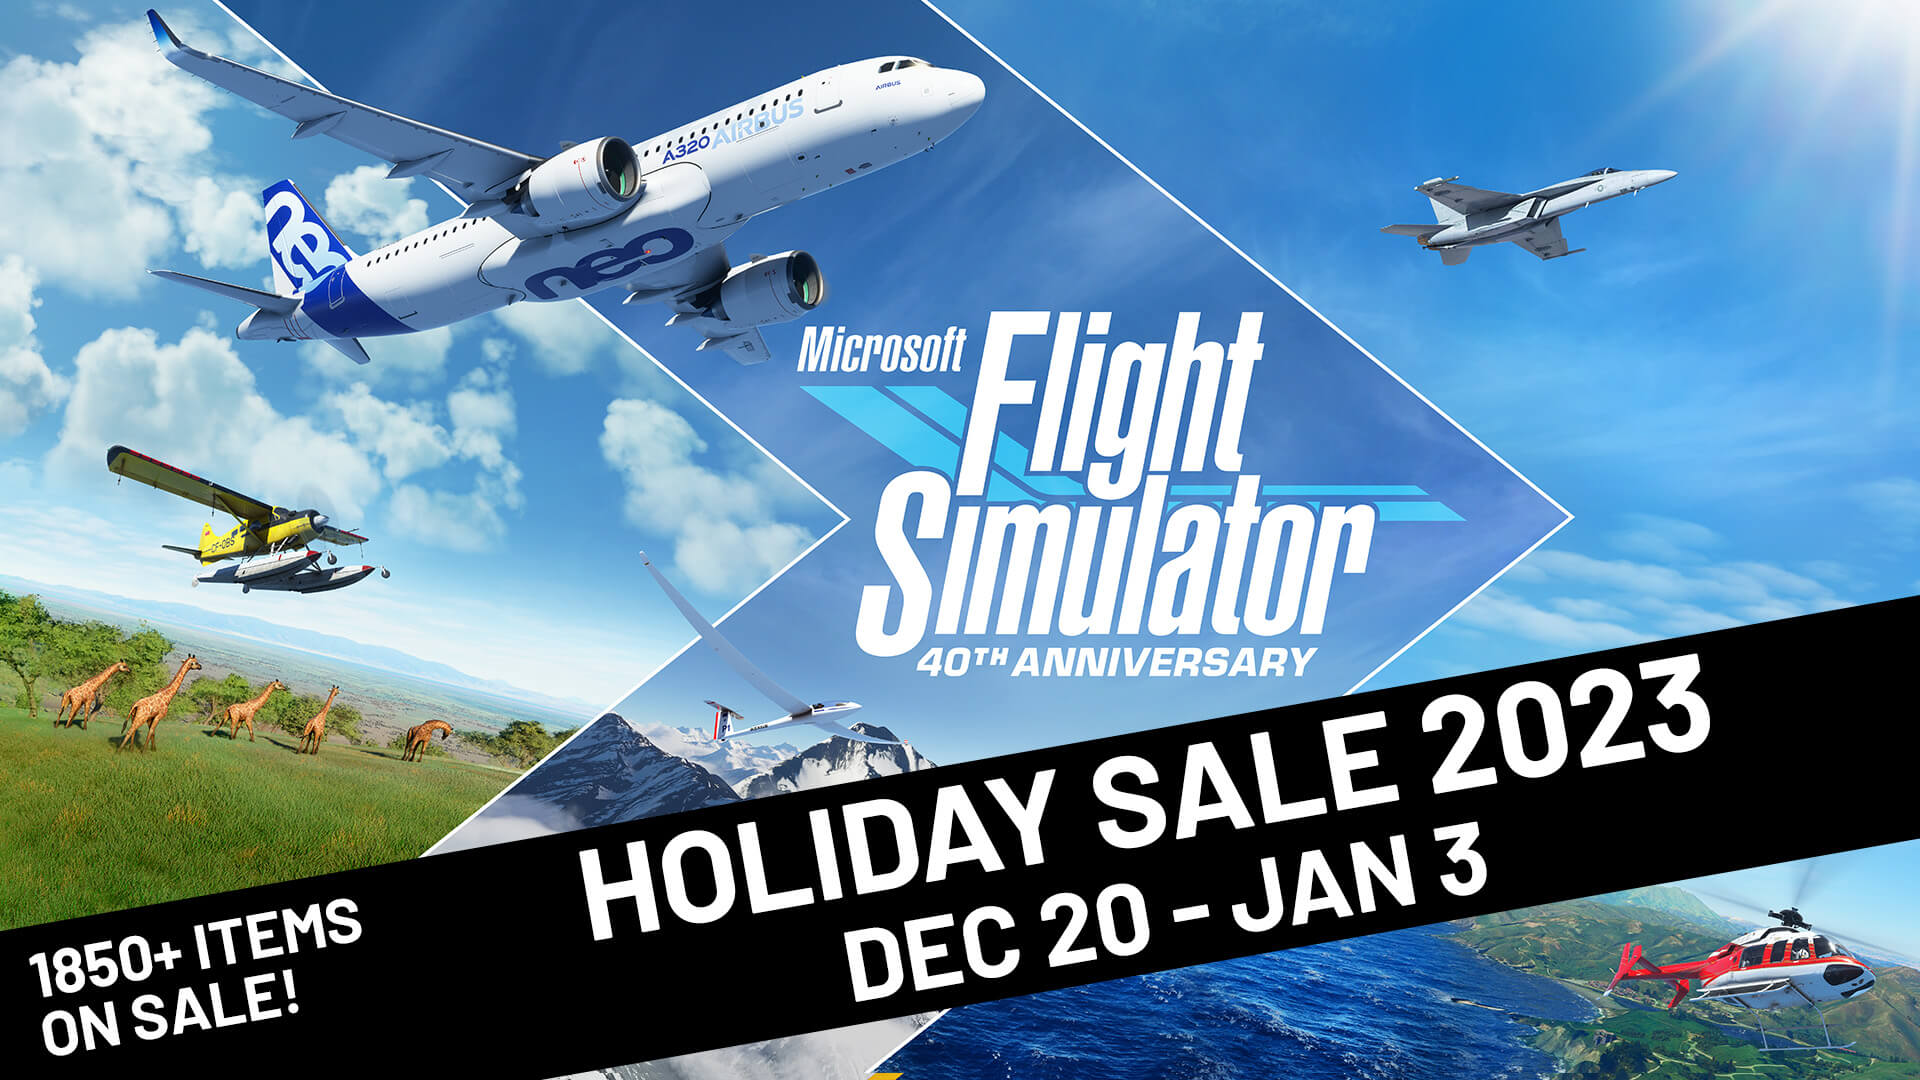 Microsoft Flight Simulator Holiday Sale 2023. December 20 - Jan 3. 1850+ items on sale!